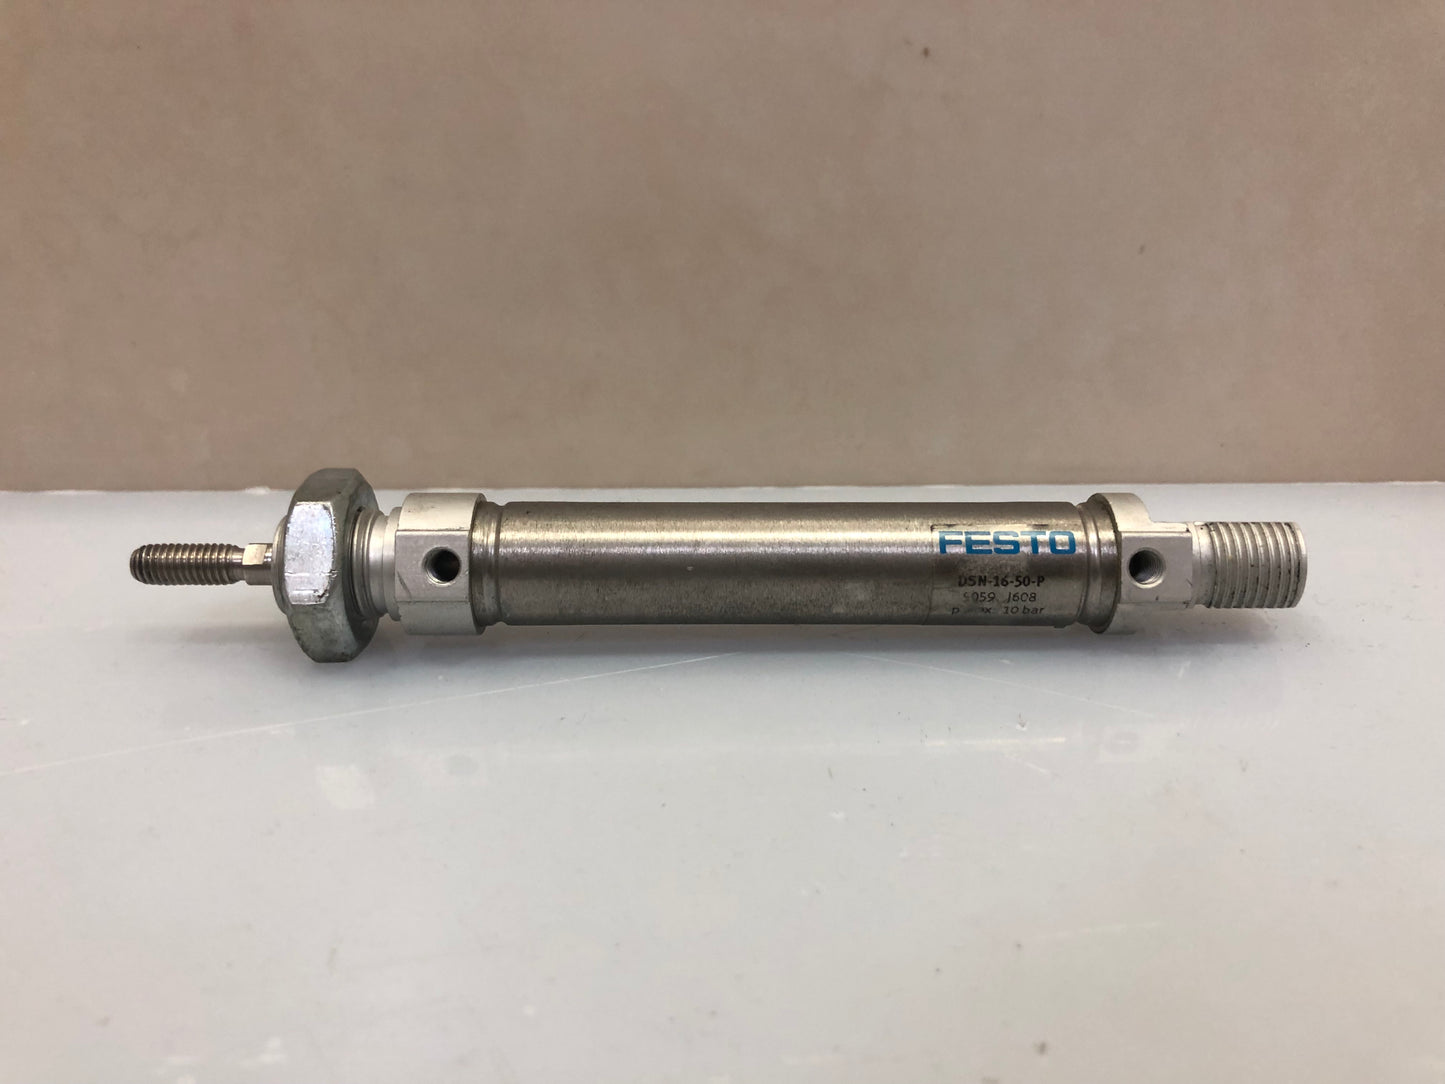 Festo DSN-16-50-P 5059 Pneumatic Cylinder